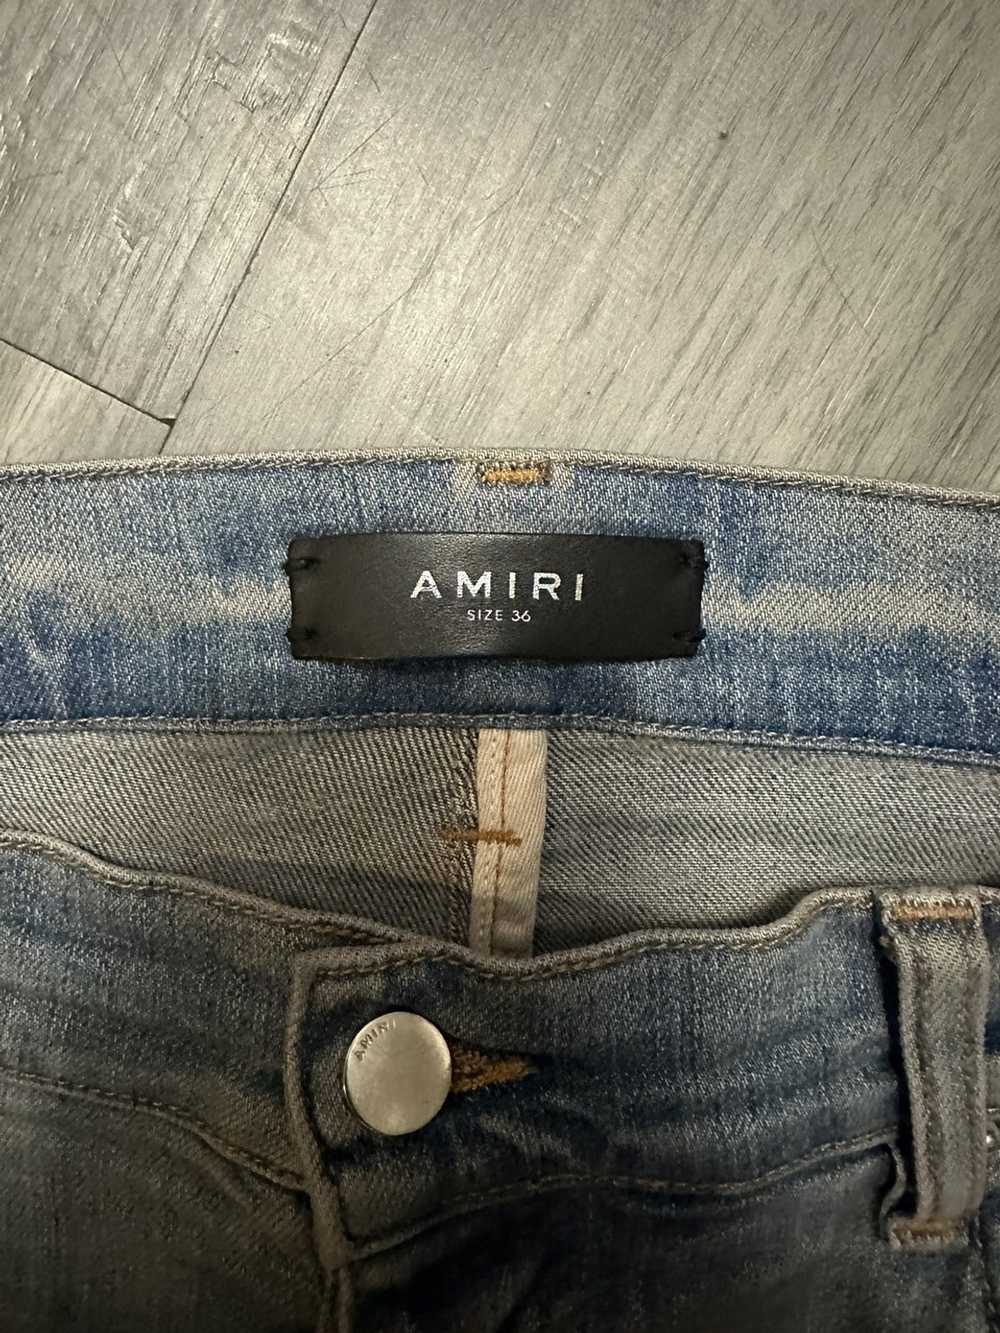 Amiri Amiri Jeans MX1 jeans - image 4